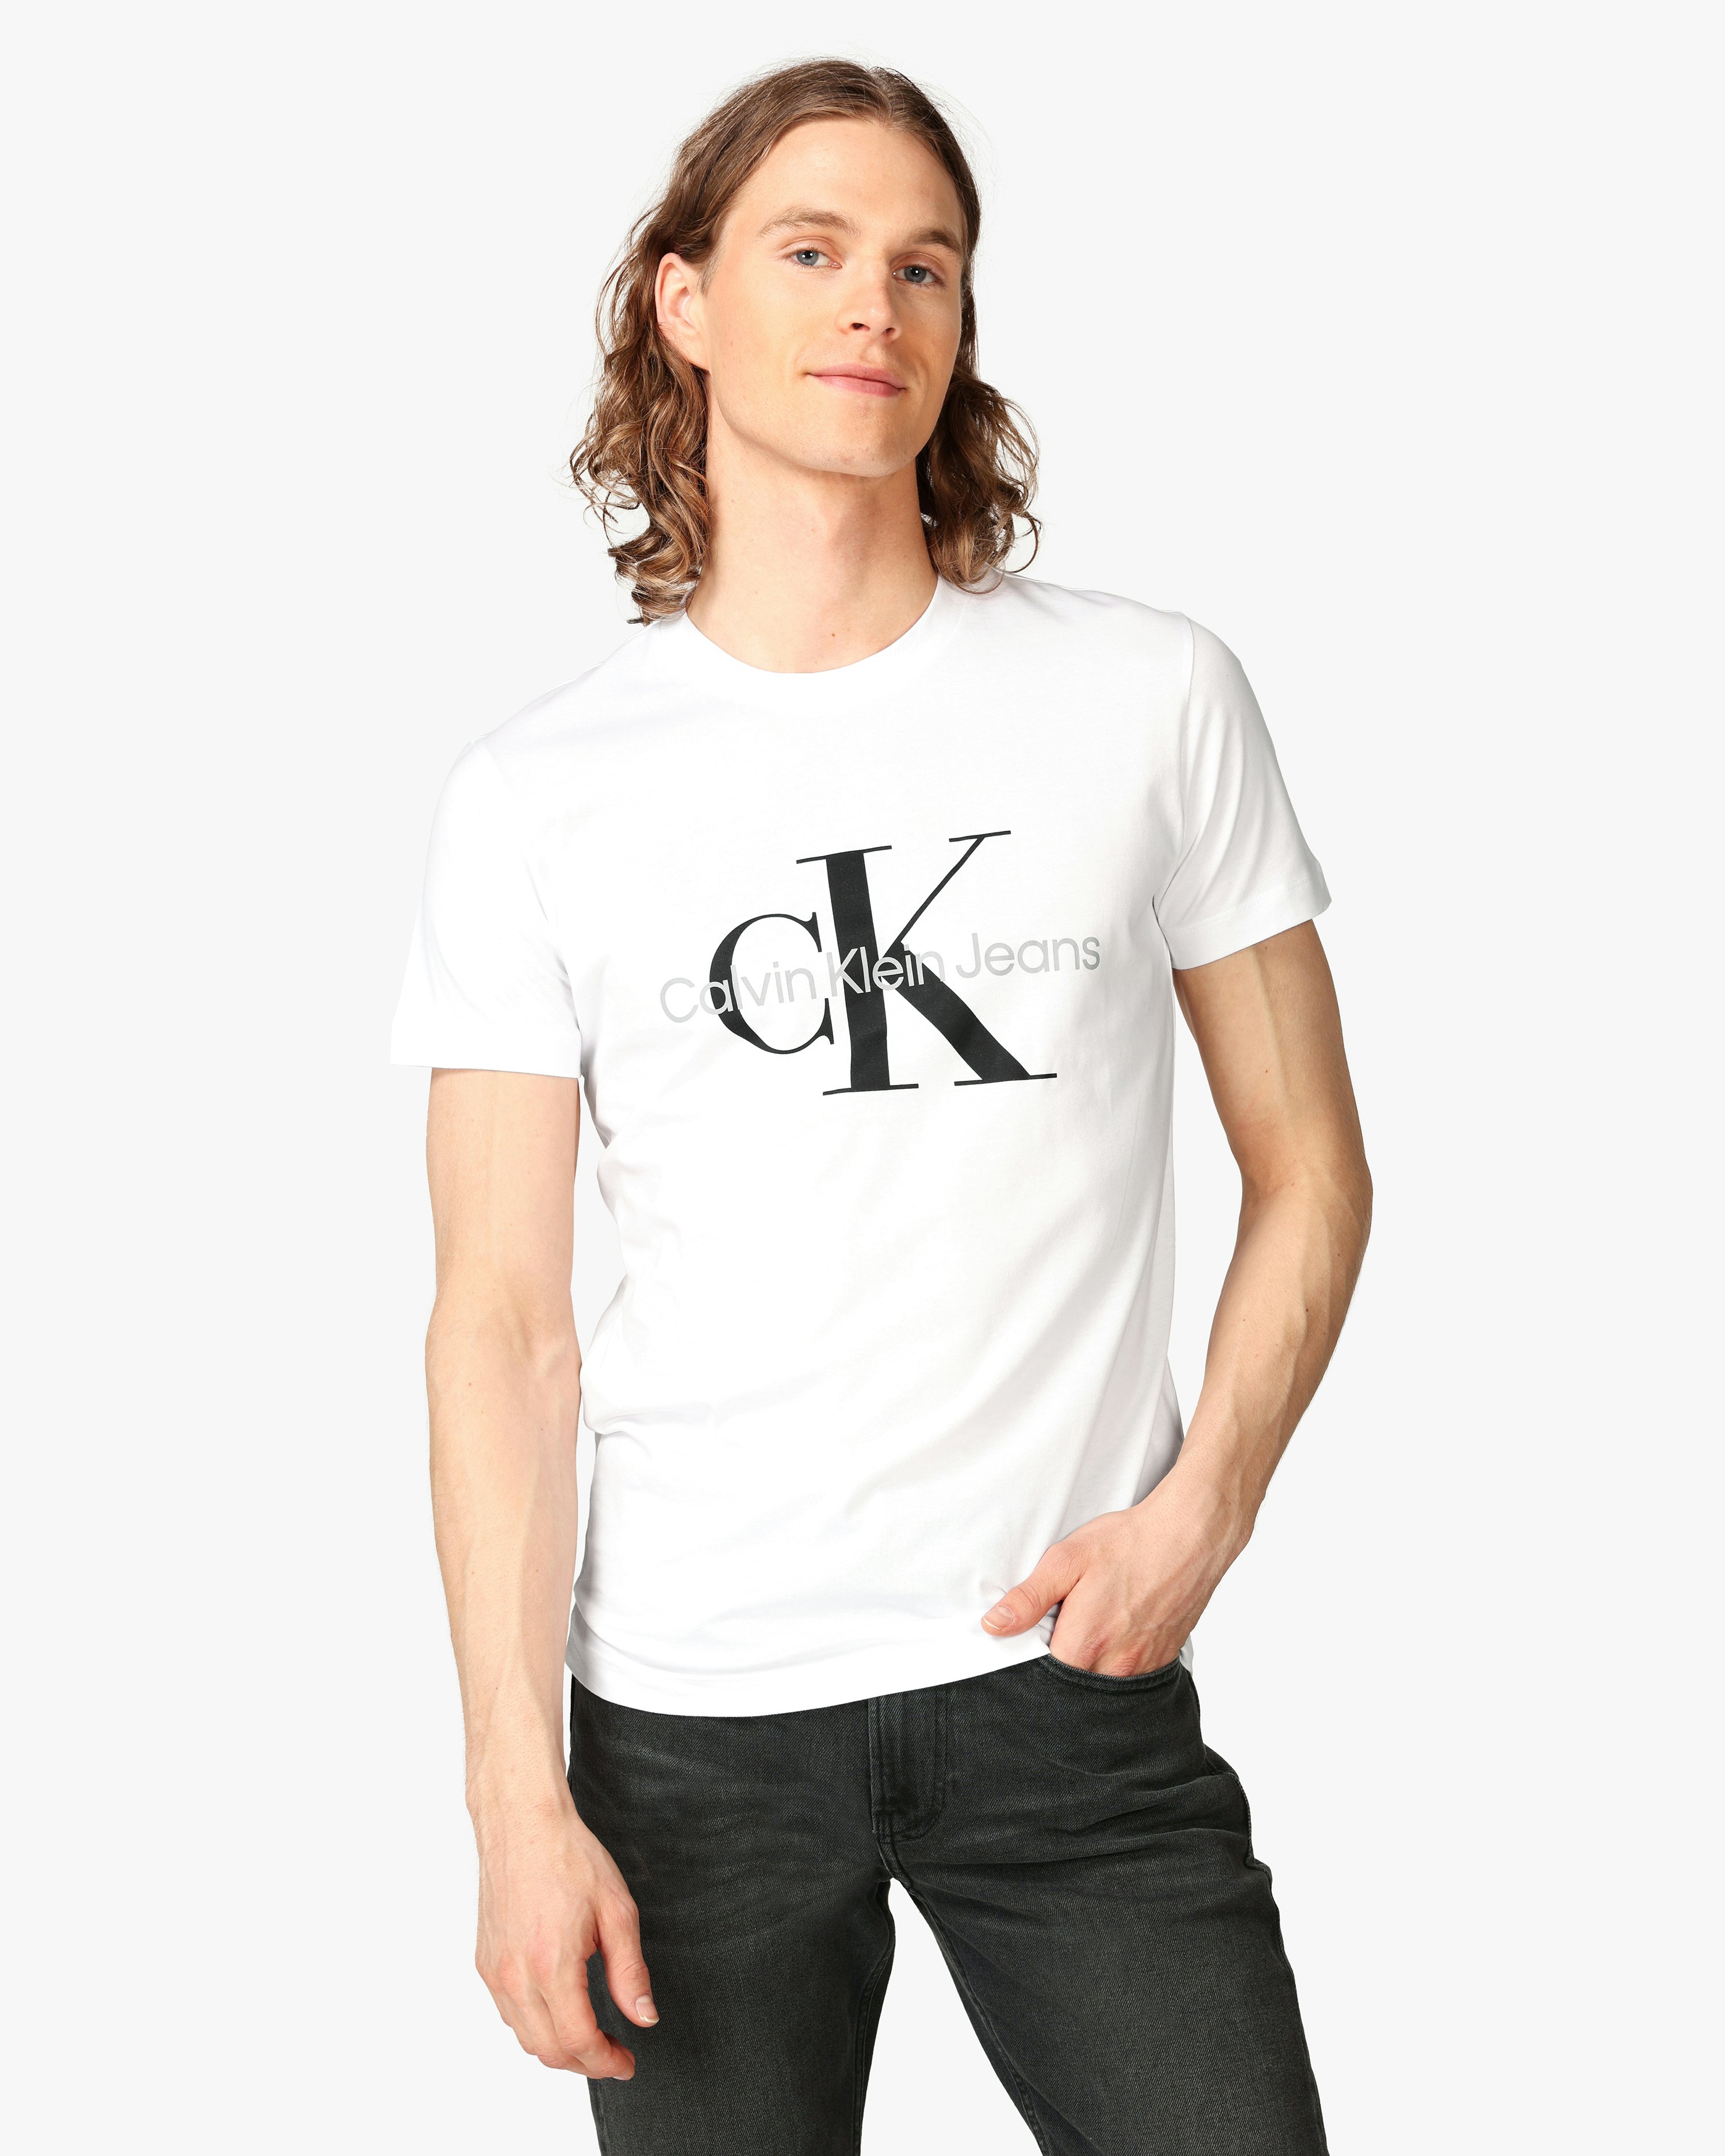 CK JEANS Core Monogram Slim White T-Shirt Men at